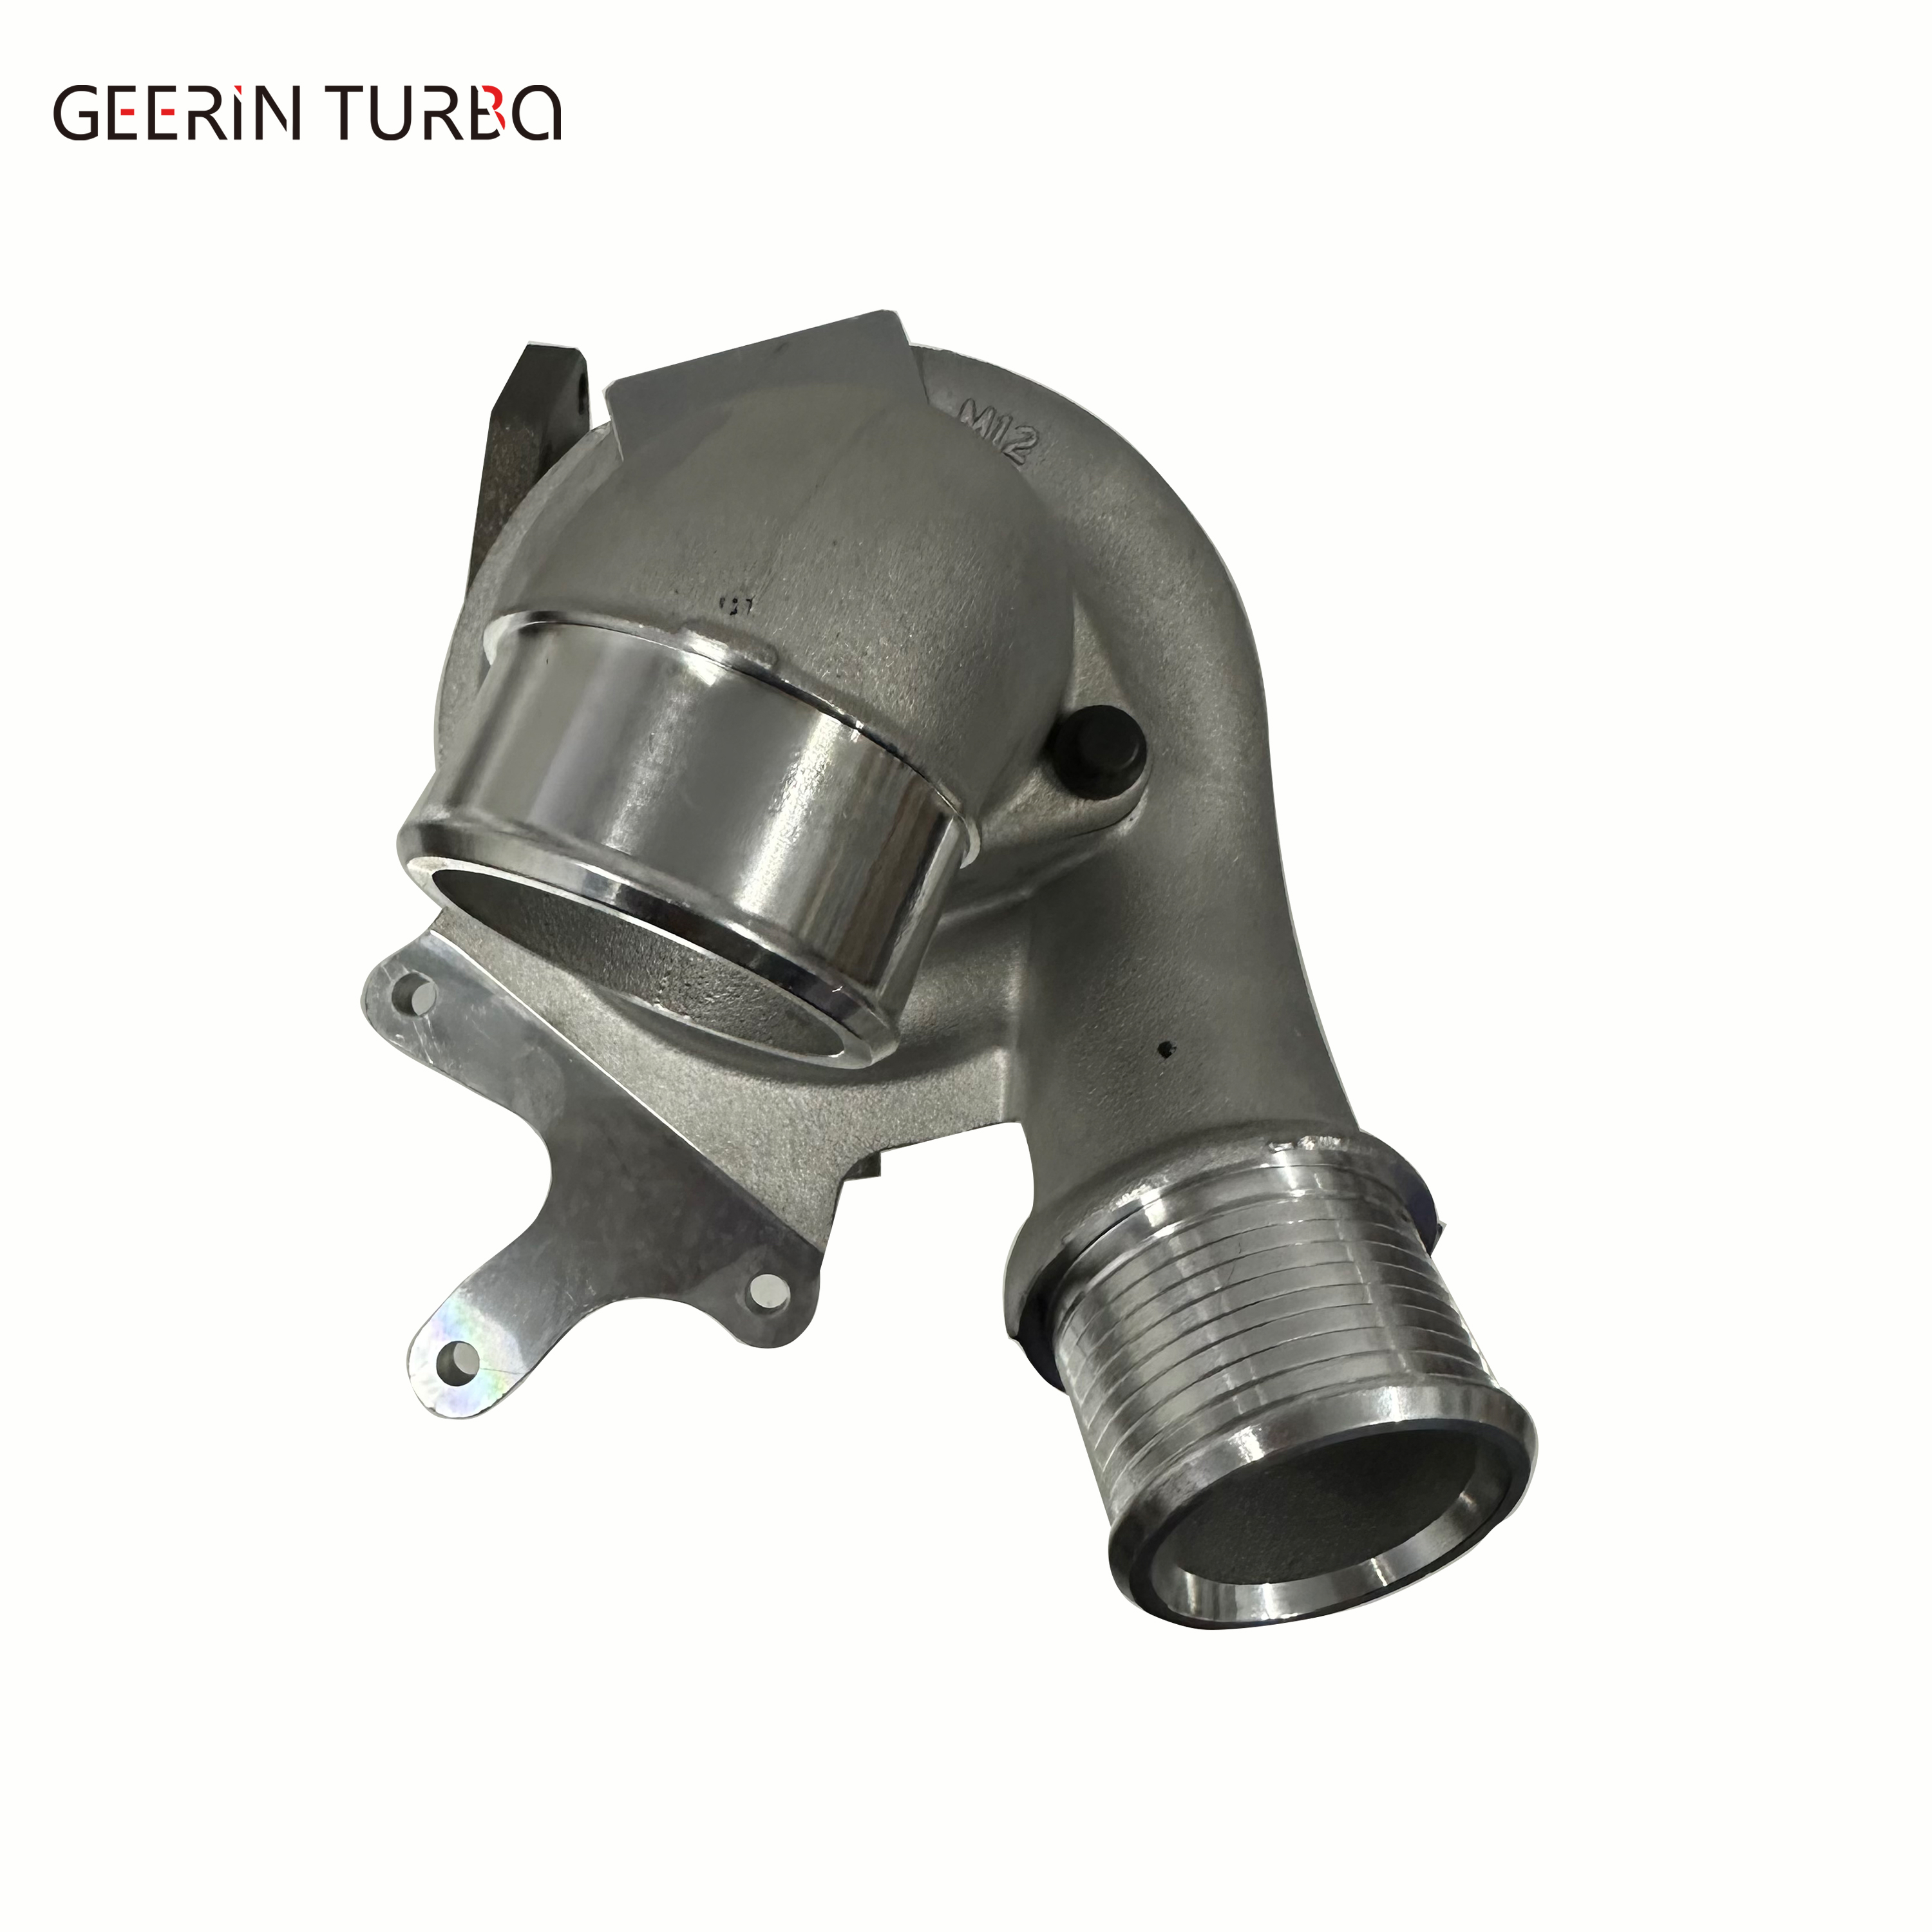 GTB1449V 823665-0001 28231-4A600 Auto Parts Turbo Turbocharger For Evgt vehicles Hyundai Kia Factory